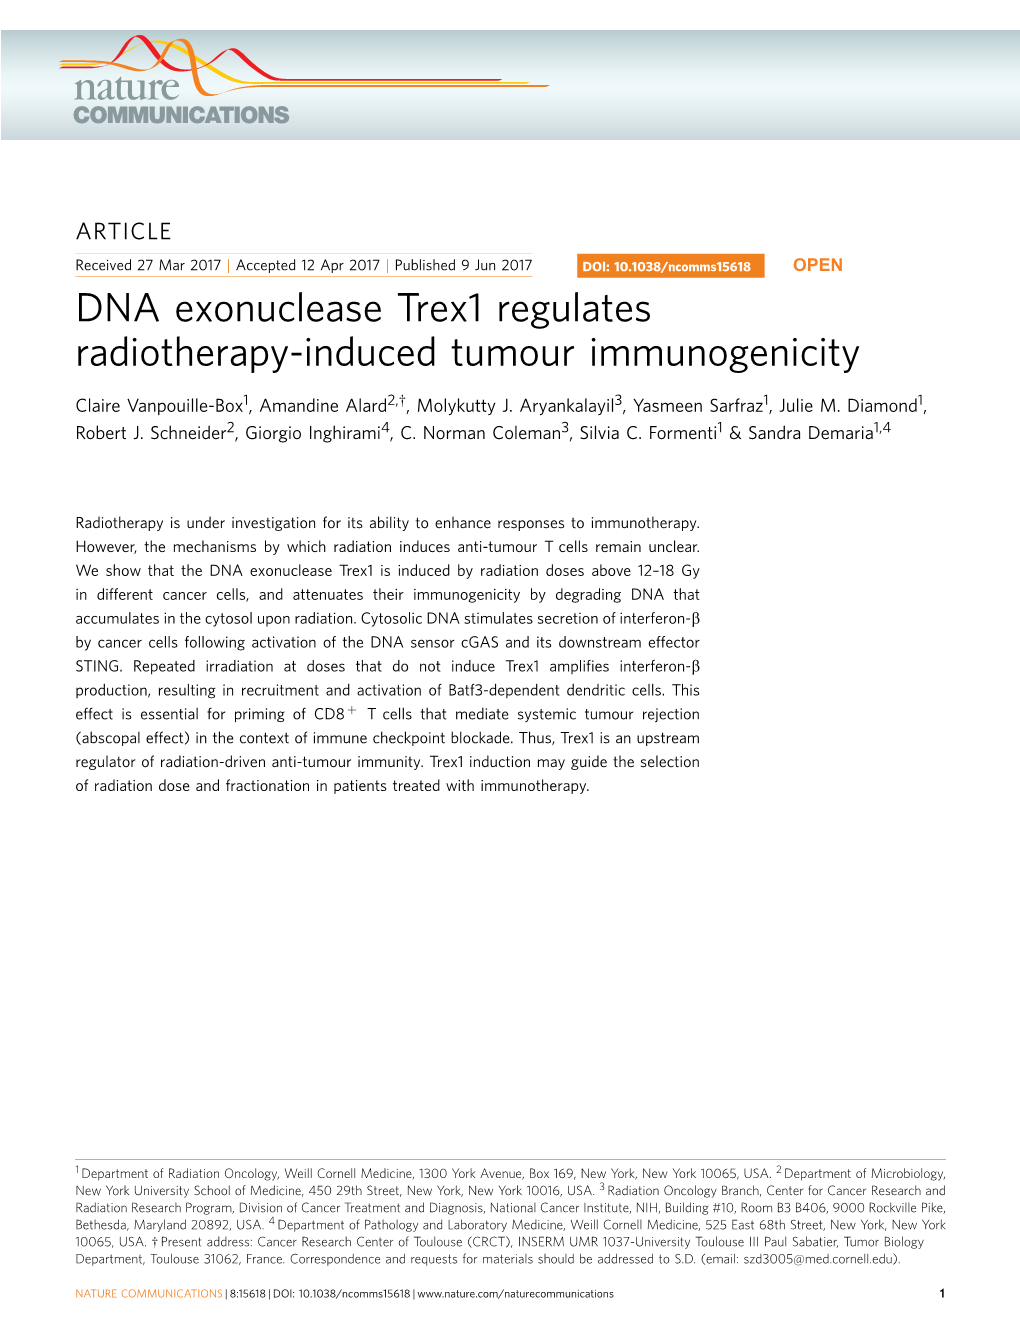 DNA Exonuclease Trex1 Regulates Radiotherapy-Induced Tumour Immunogenicity